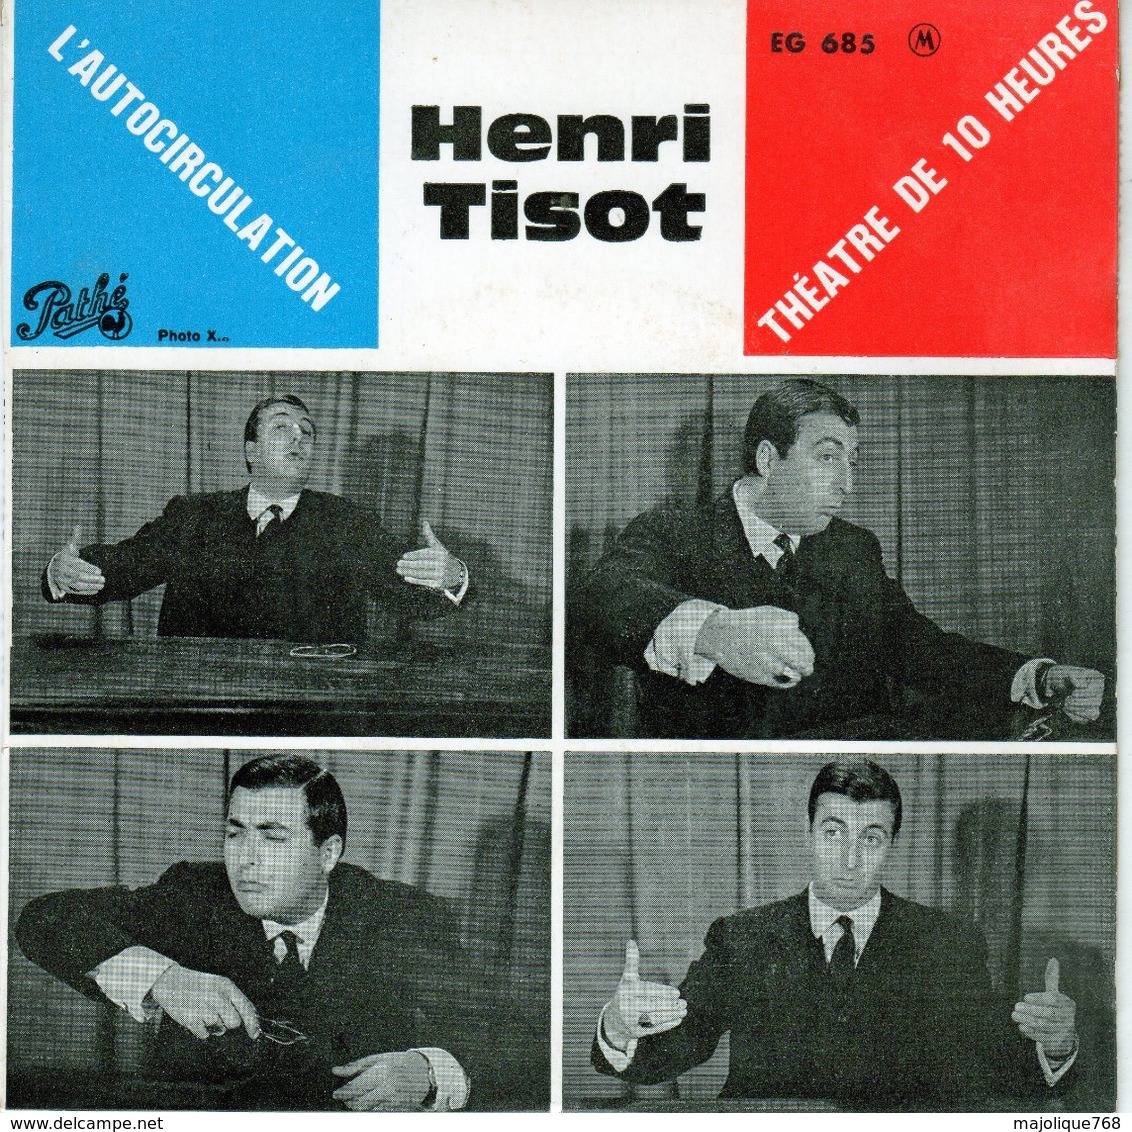 Henri Tisot - L'Autocirculation - Pathé EG 685 - 1962 - Humor, Cabaret